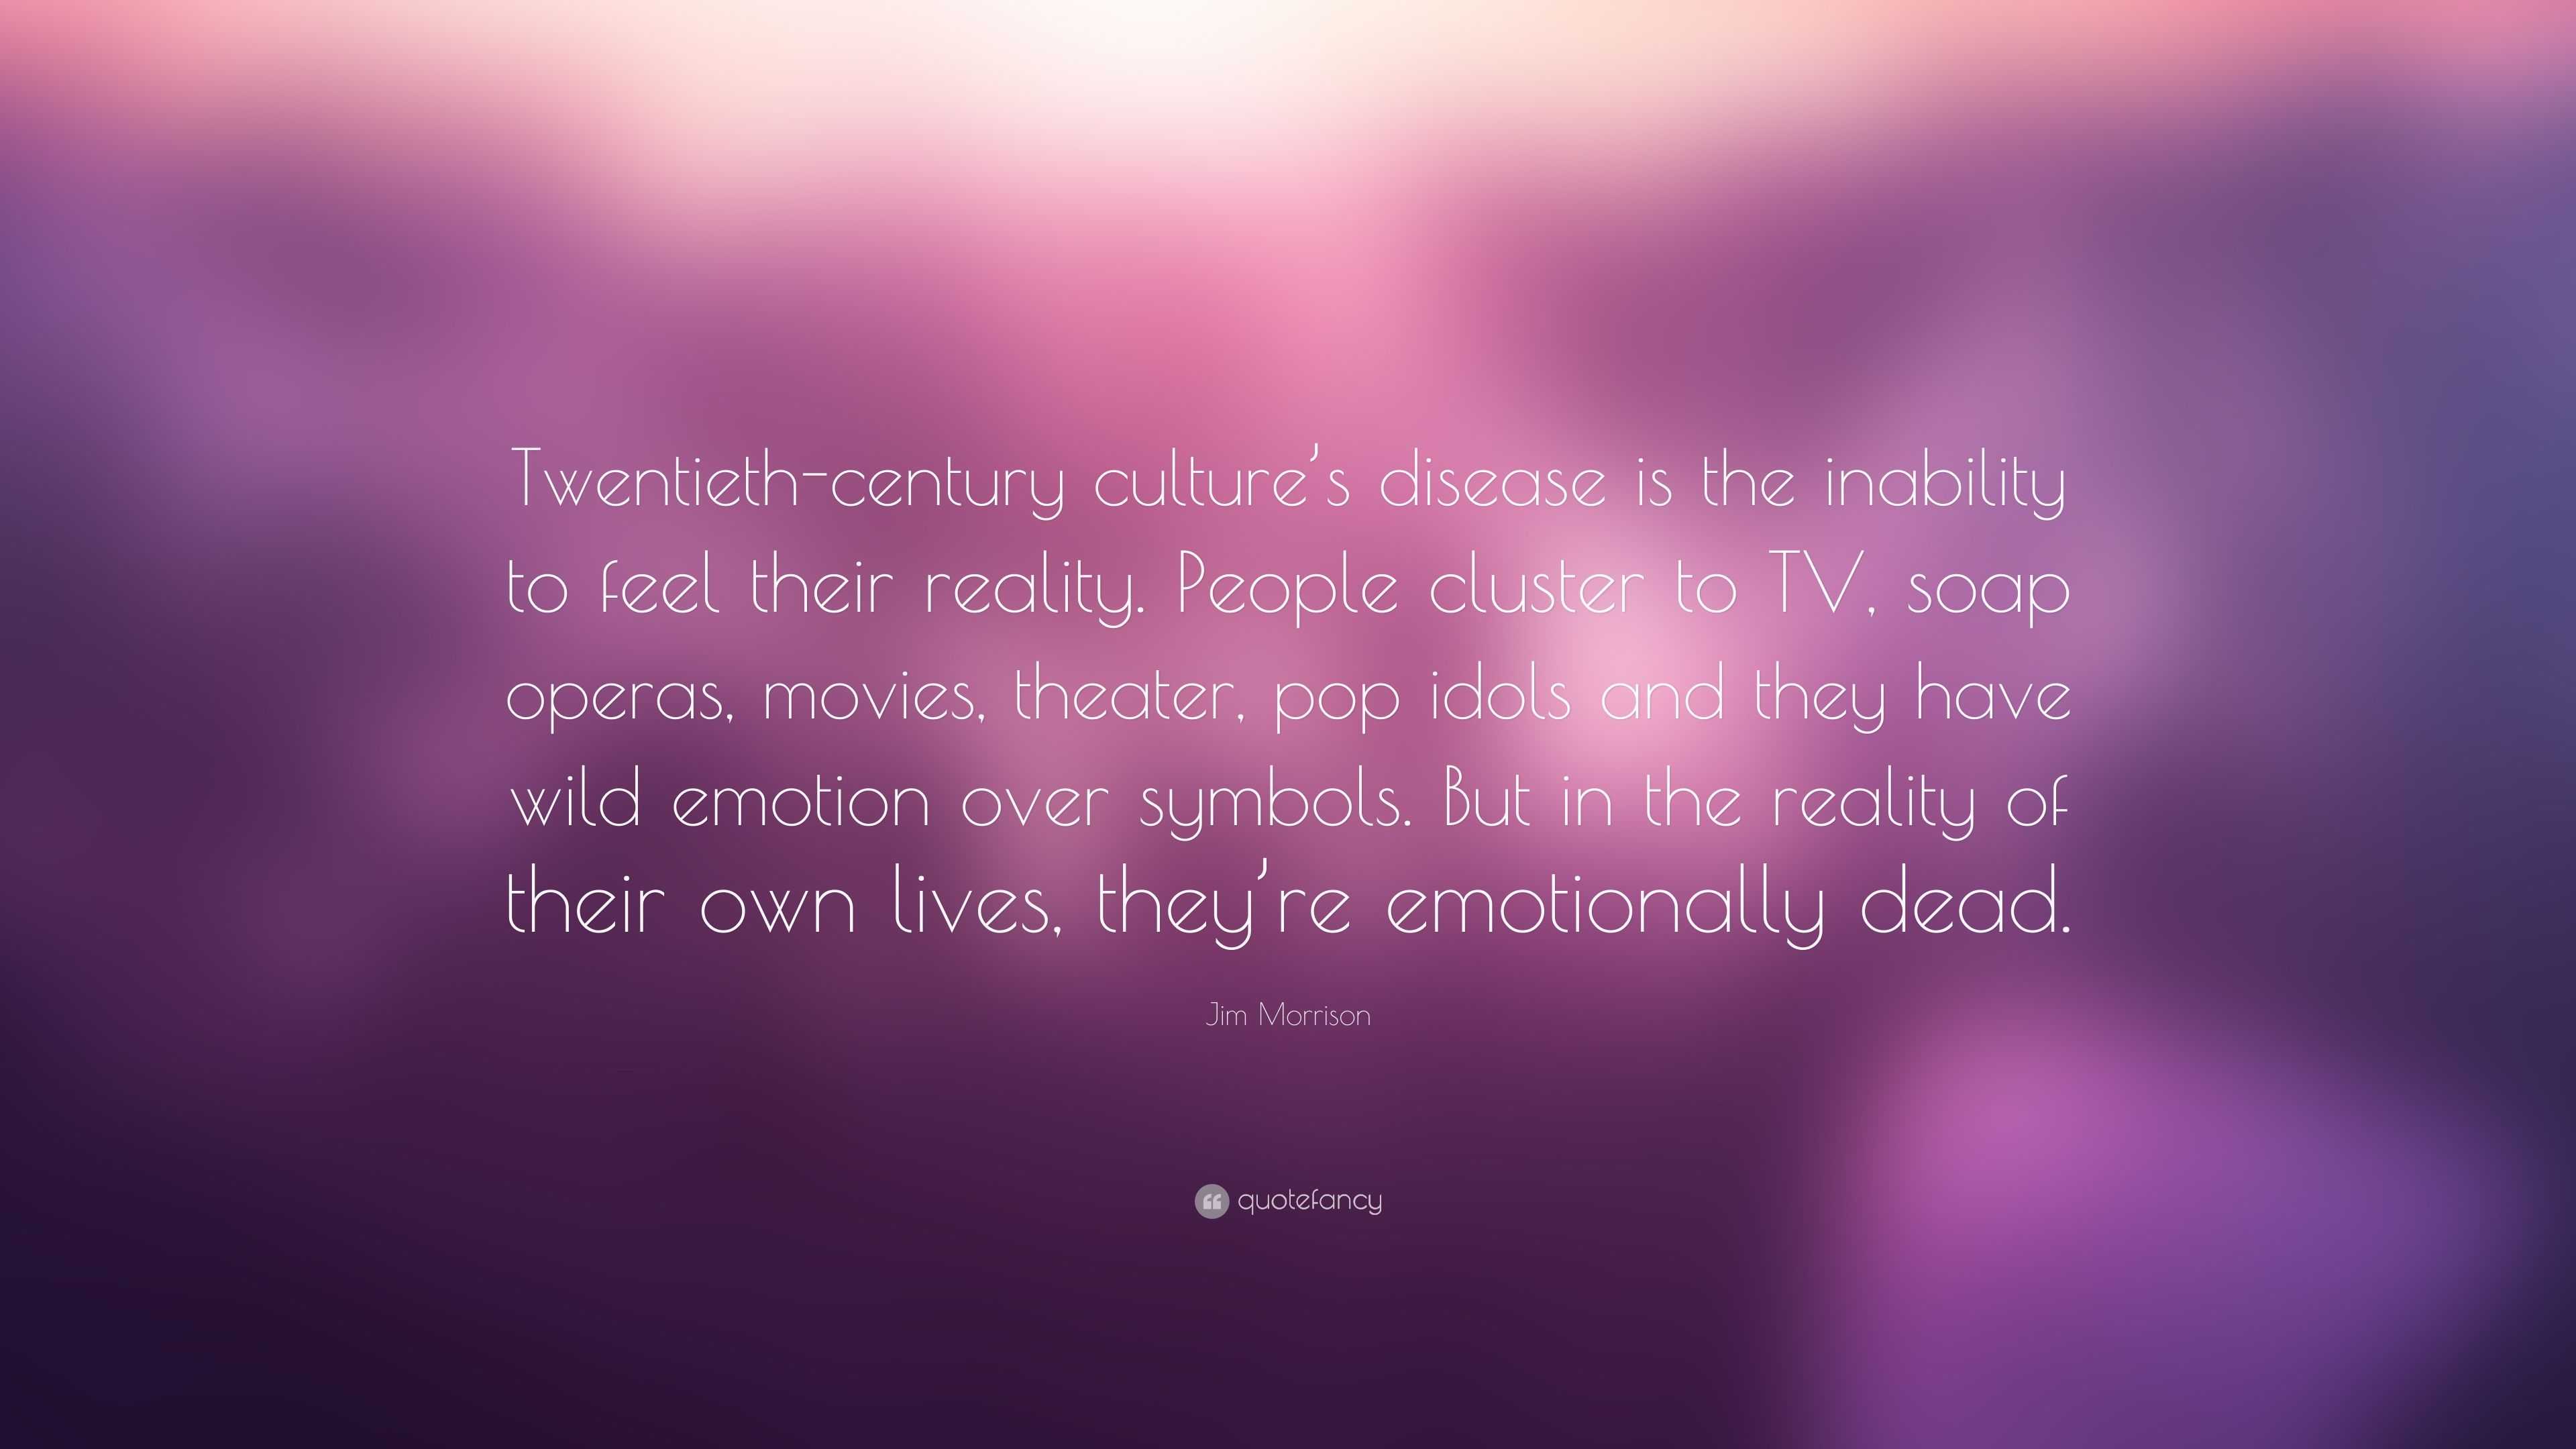 Jim Morrison Quote: “Twentieth-century culture’s disease is the ...